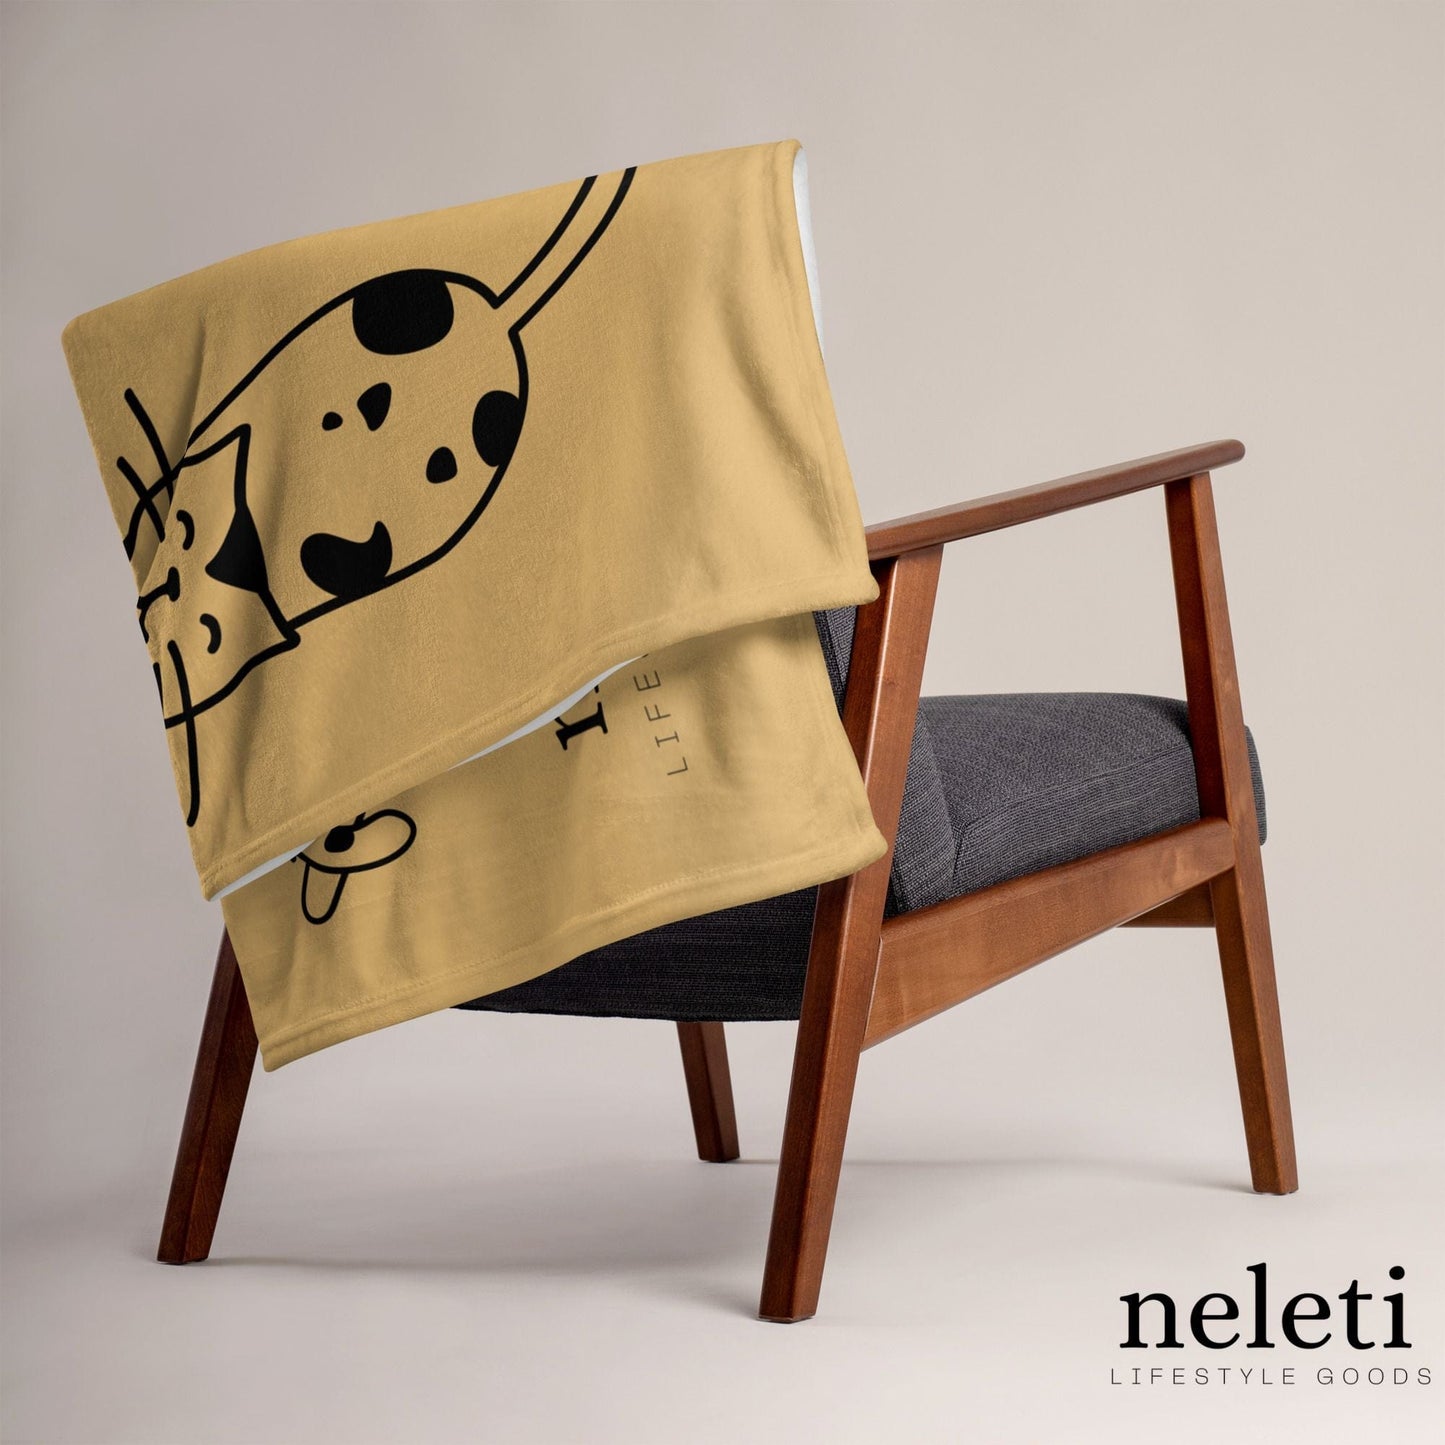 neleti.com-cat-blanket-in-fawn-color